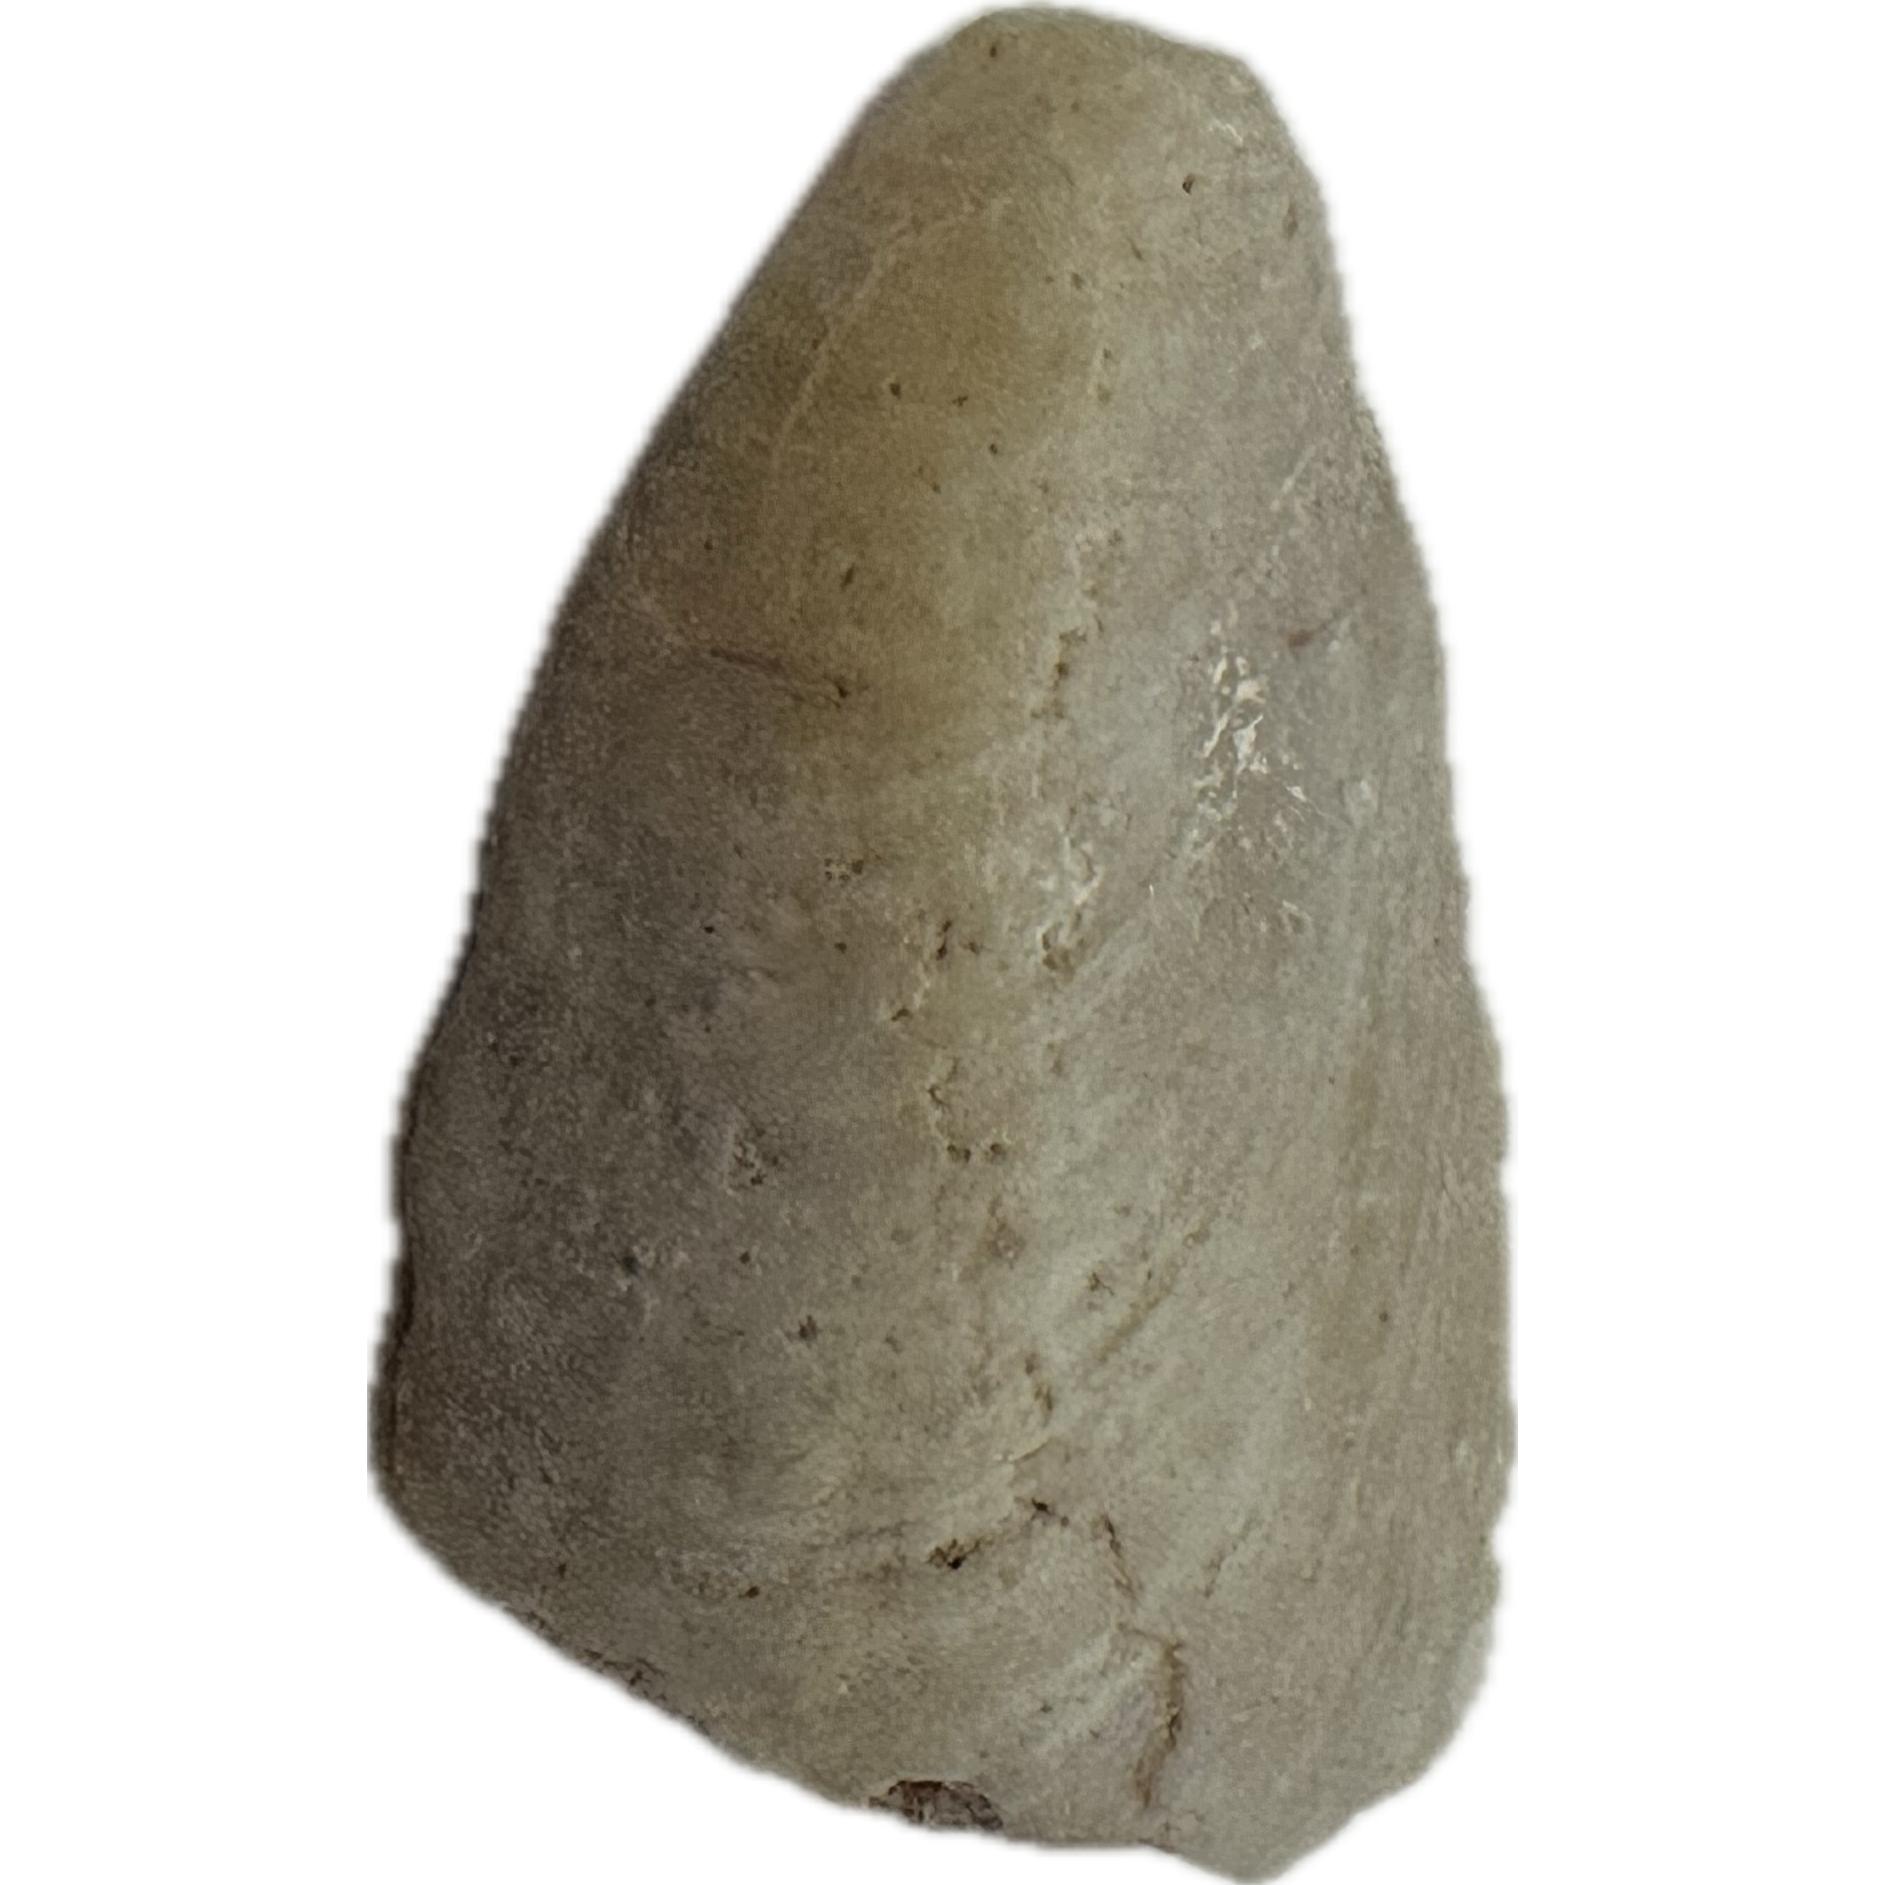 Opalized Clam, Coober Pedy, Australia Prehistoric Online